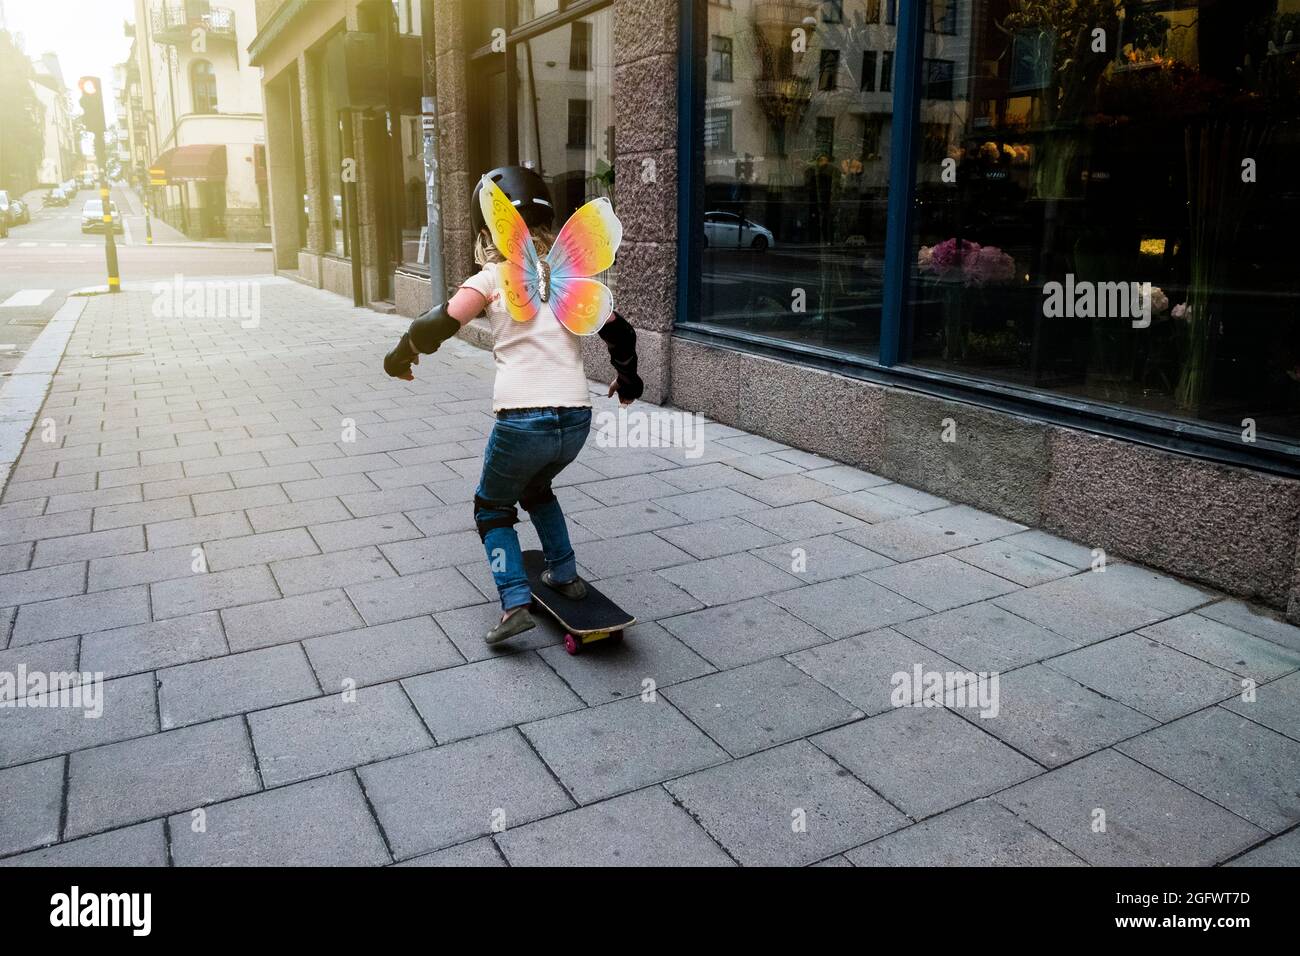 Girl skateboarding on sidewalk Stock Photo